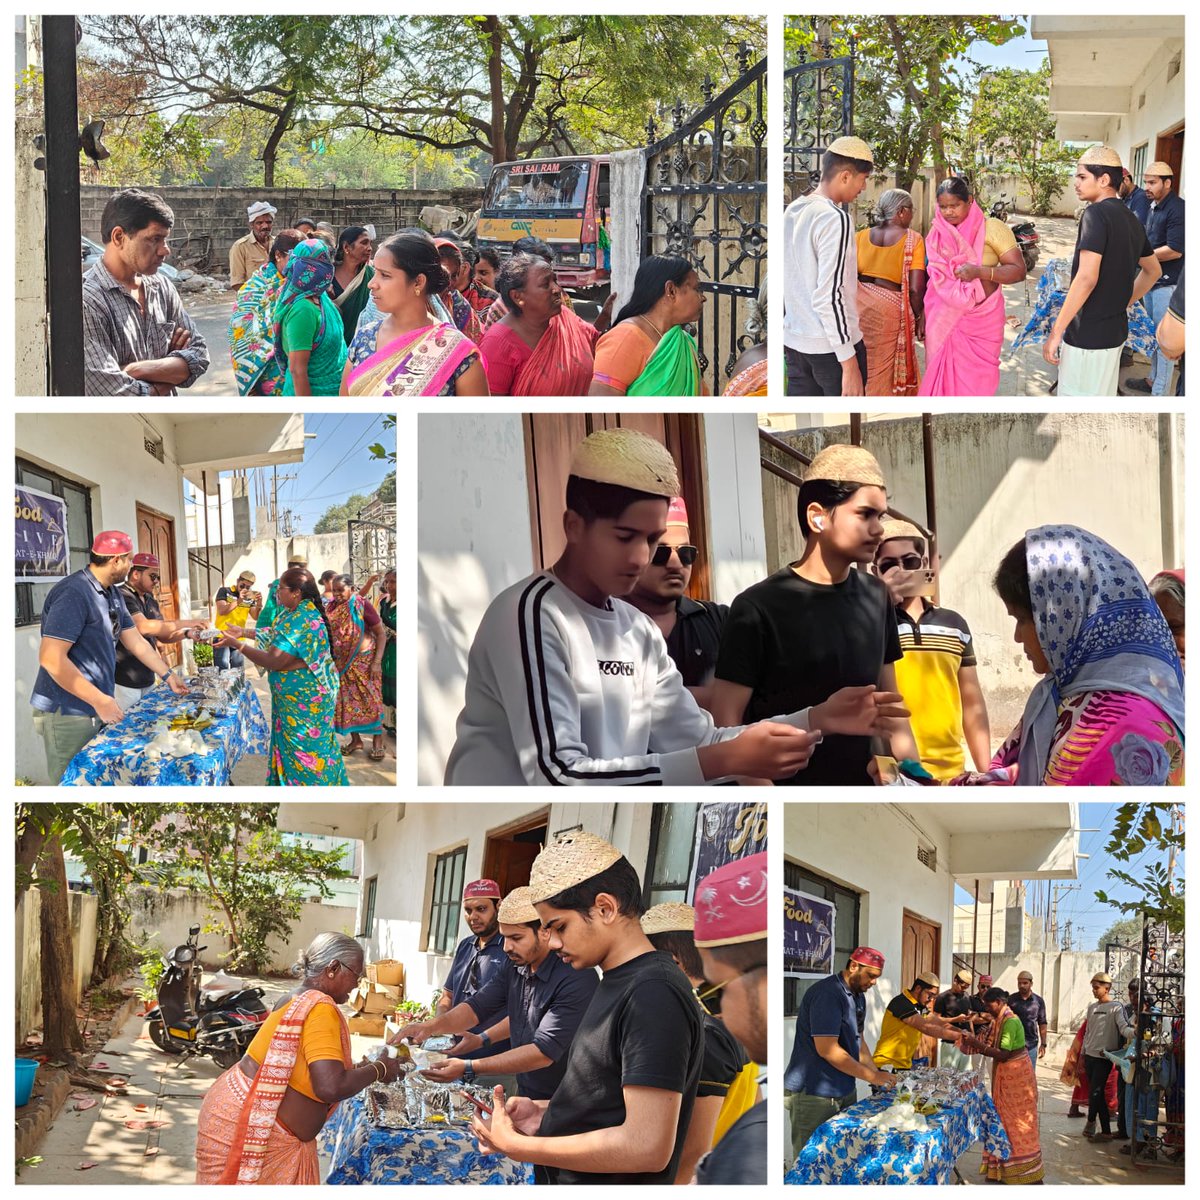 Majlis Khuddamul Ahmadiyya Secunderabad organized a successful food drive, distributing around 50 food packets.
 #AhmadiyyaMuslims #Secunderabad 🤝
#MKASecunderabad